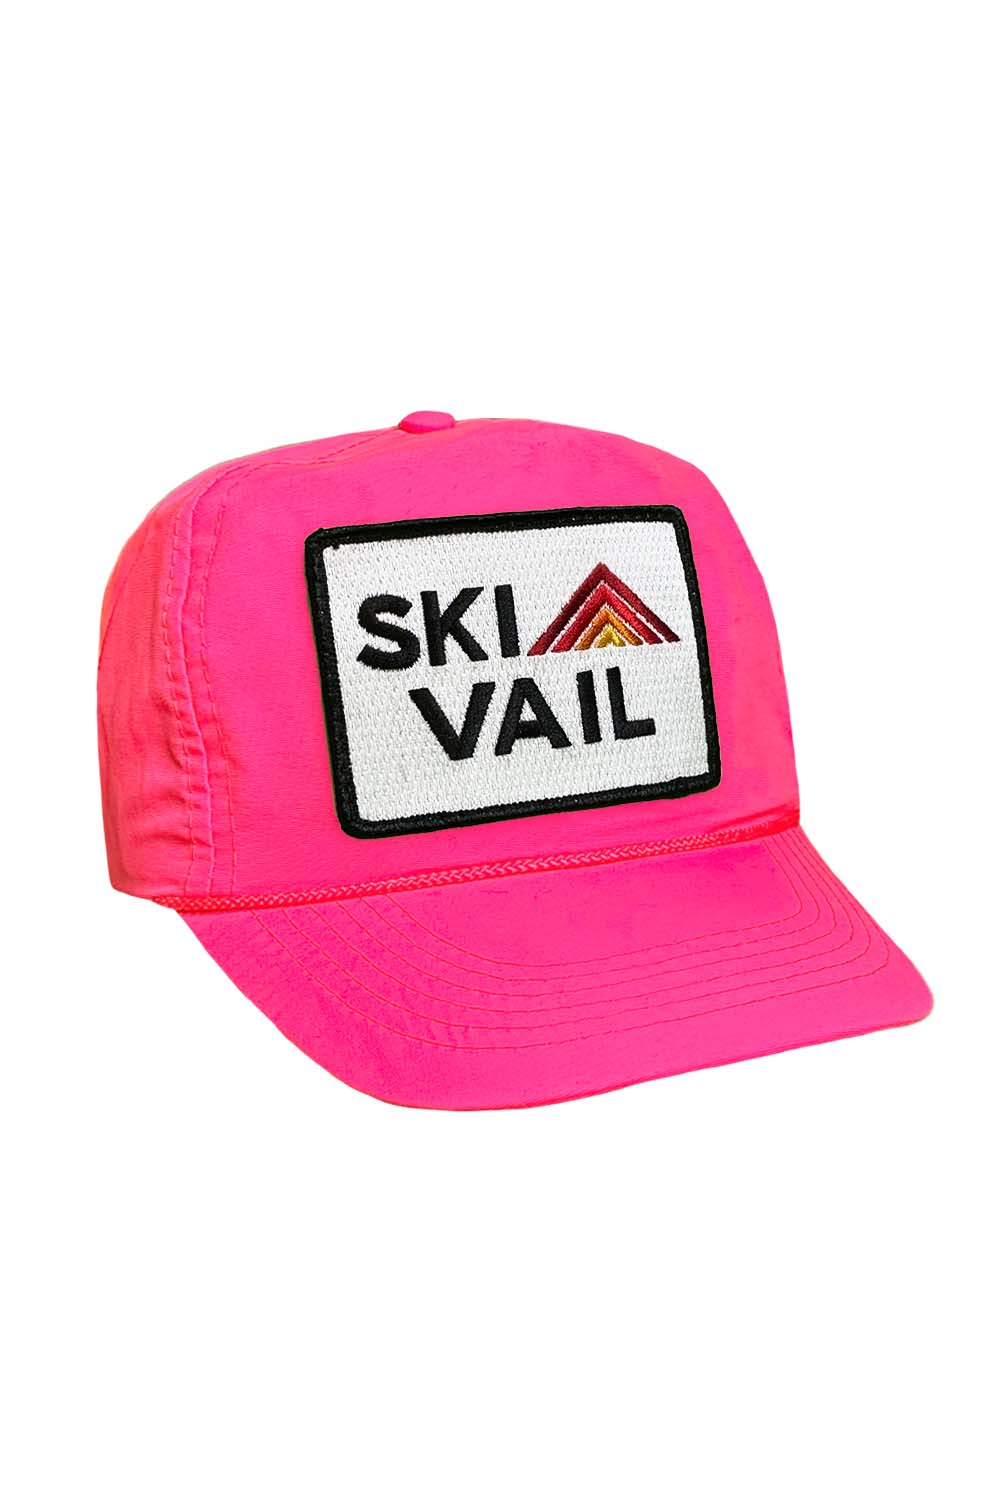 SKI VAIL - VINTAGE NYLON TRUCKER HAT HATS Aviator Nation NEON ORANGE 